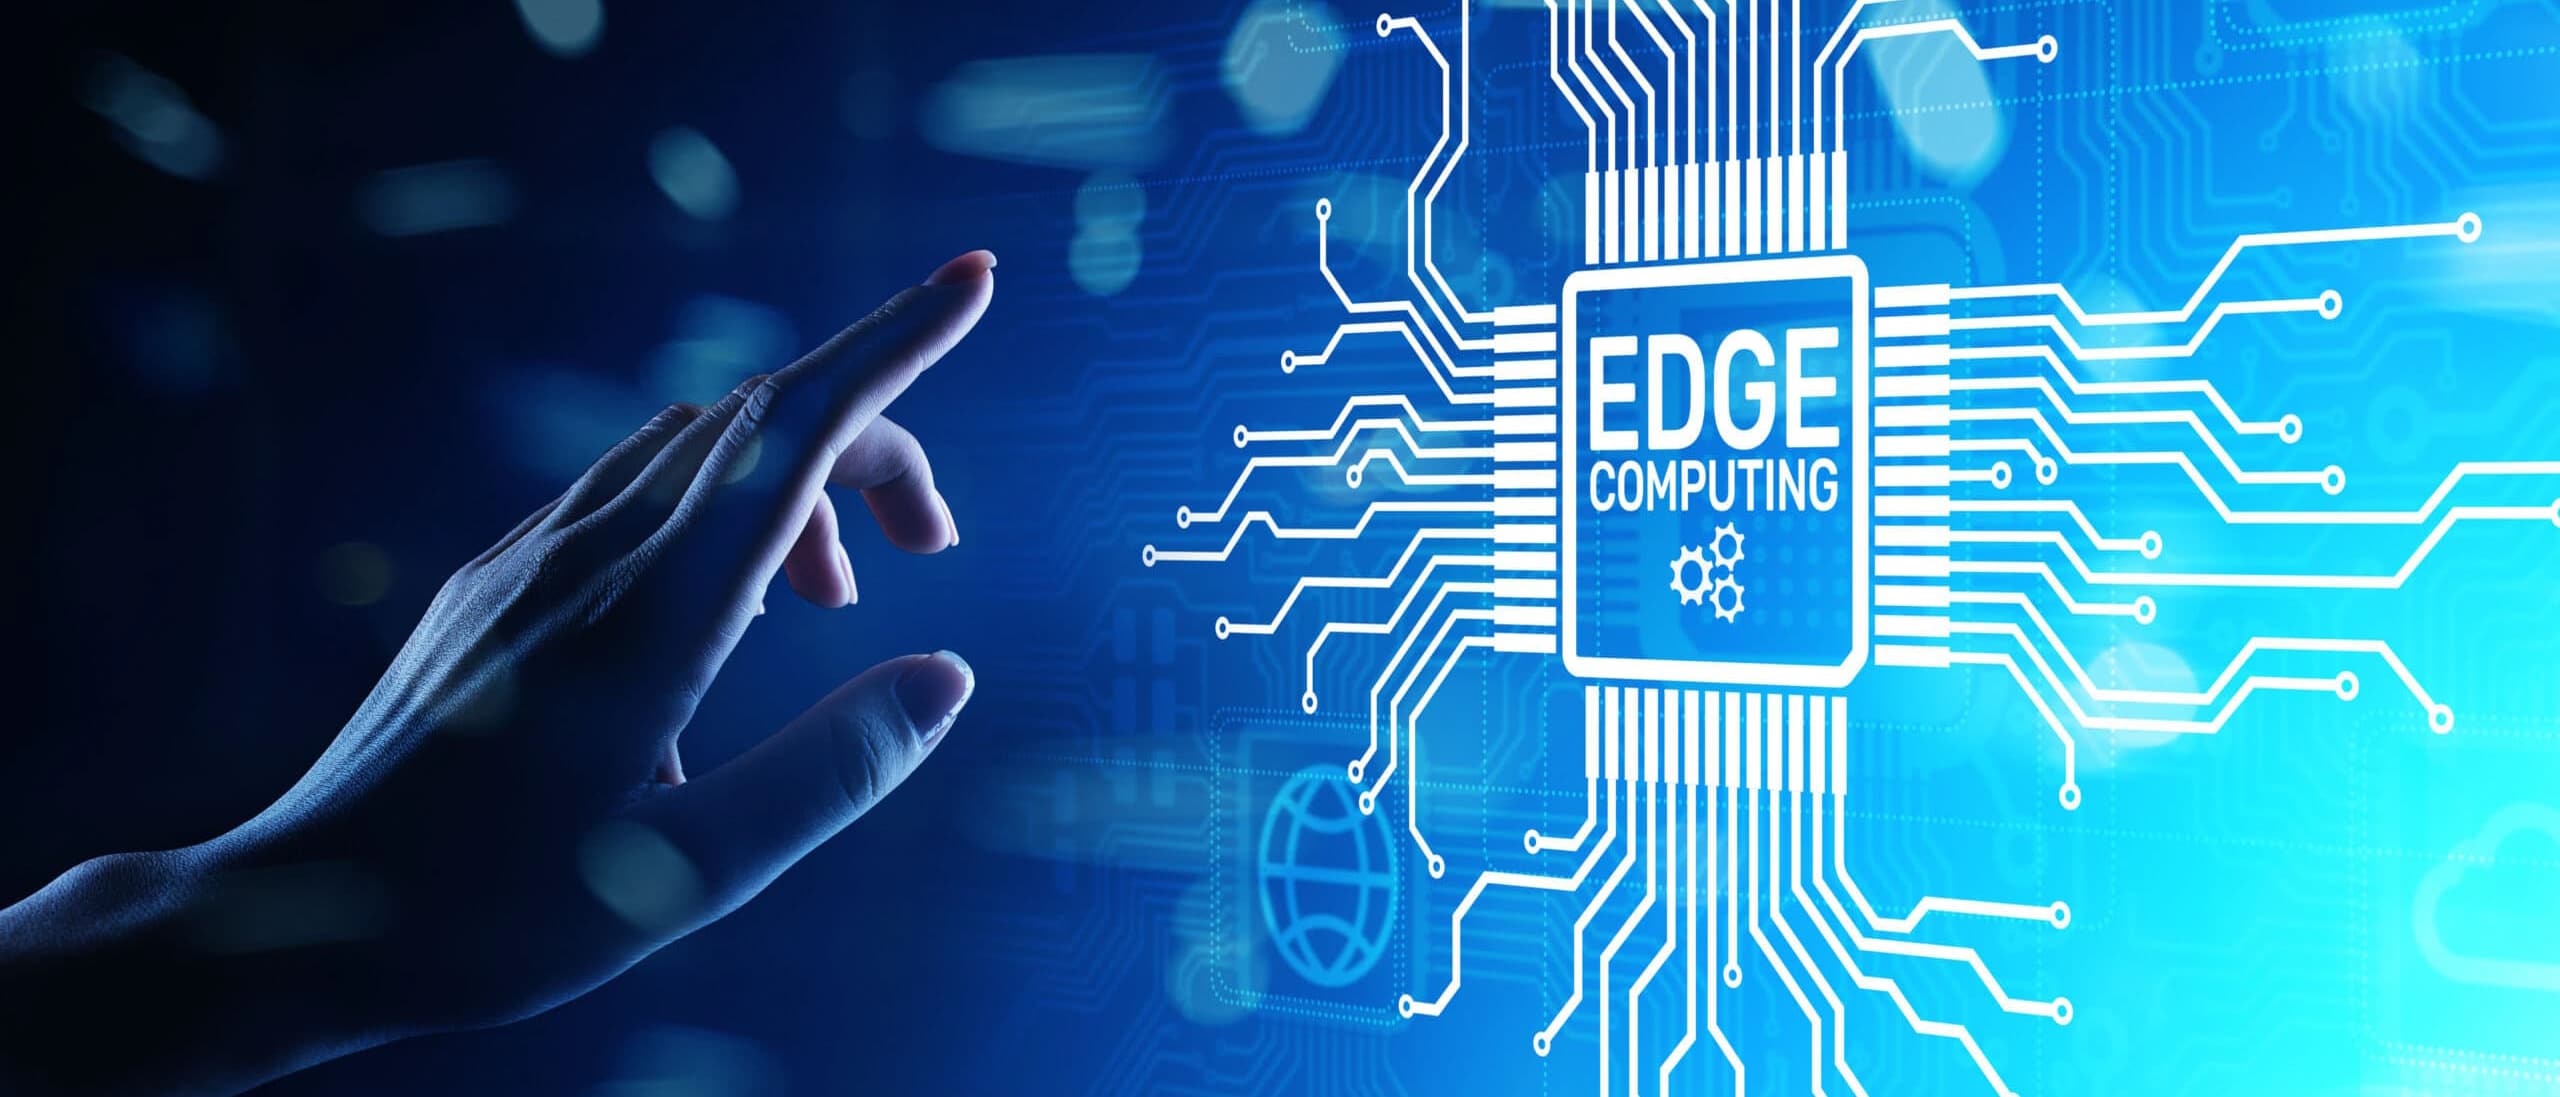 Hand tapping edge computing symbol